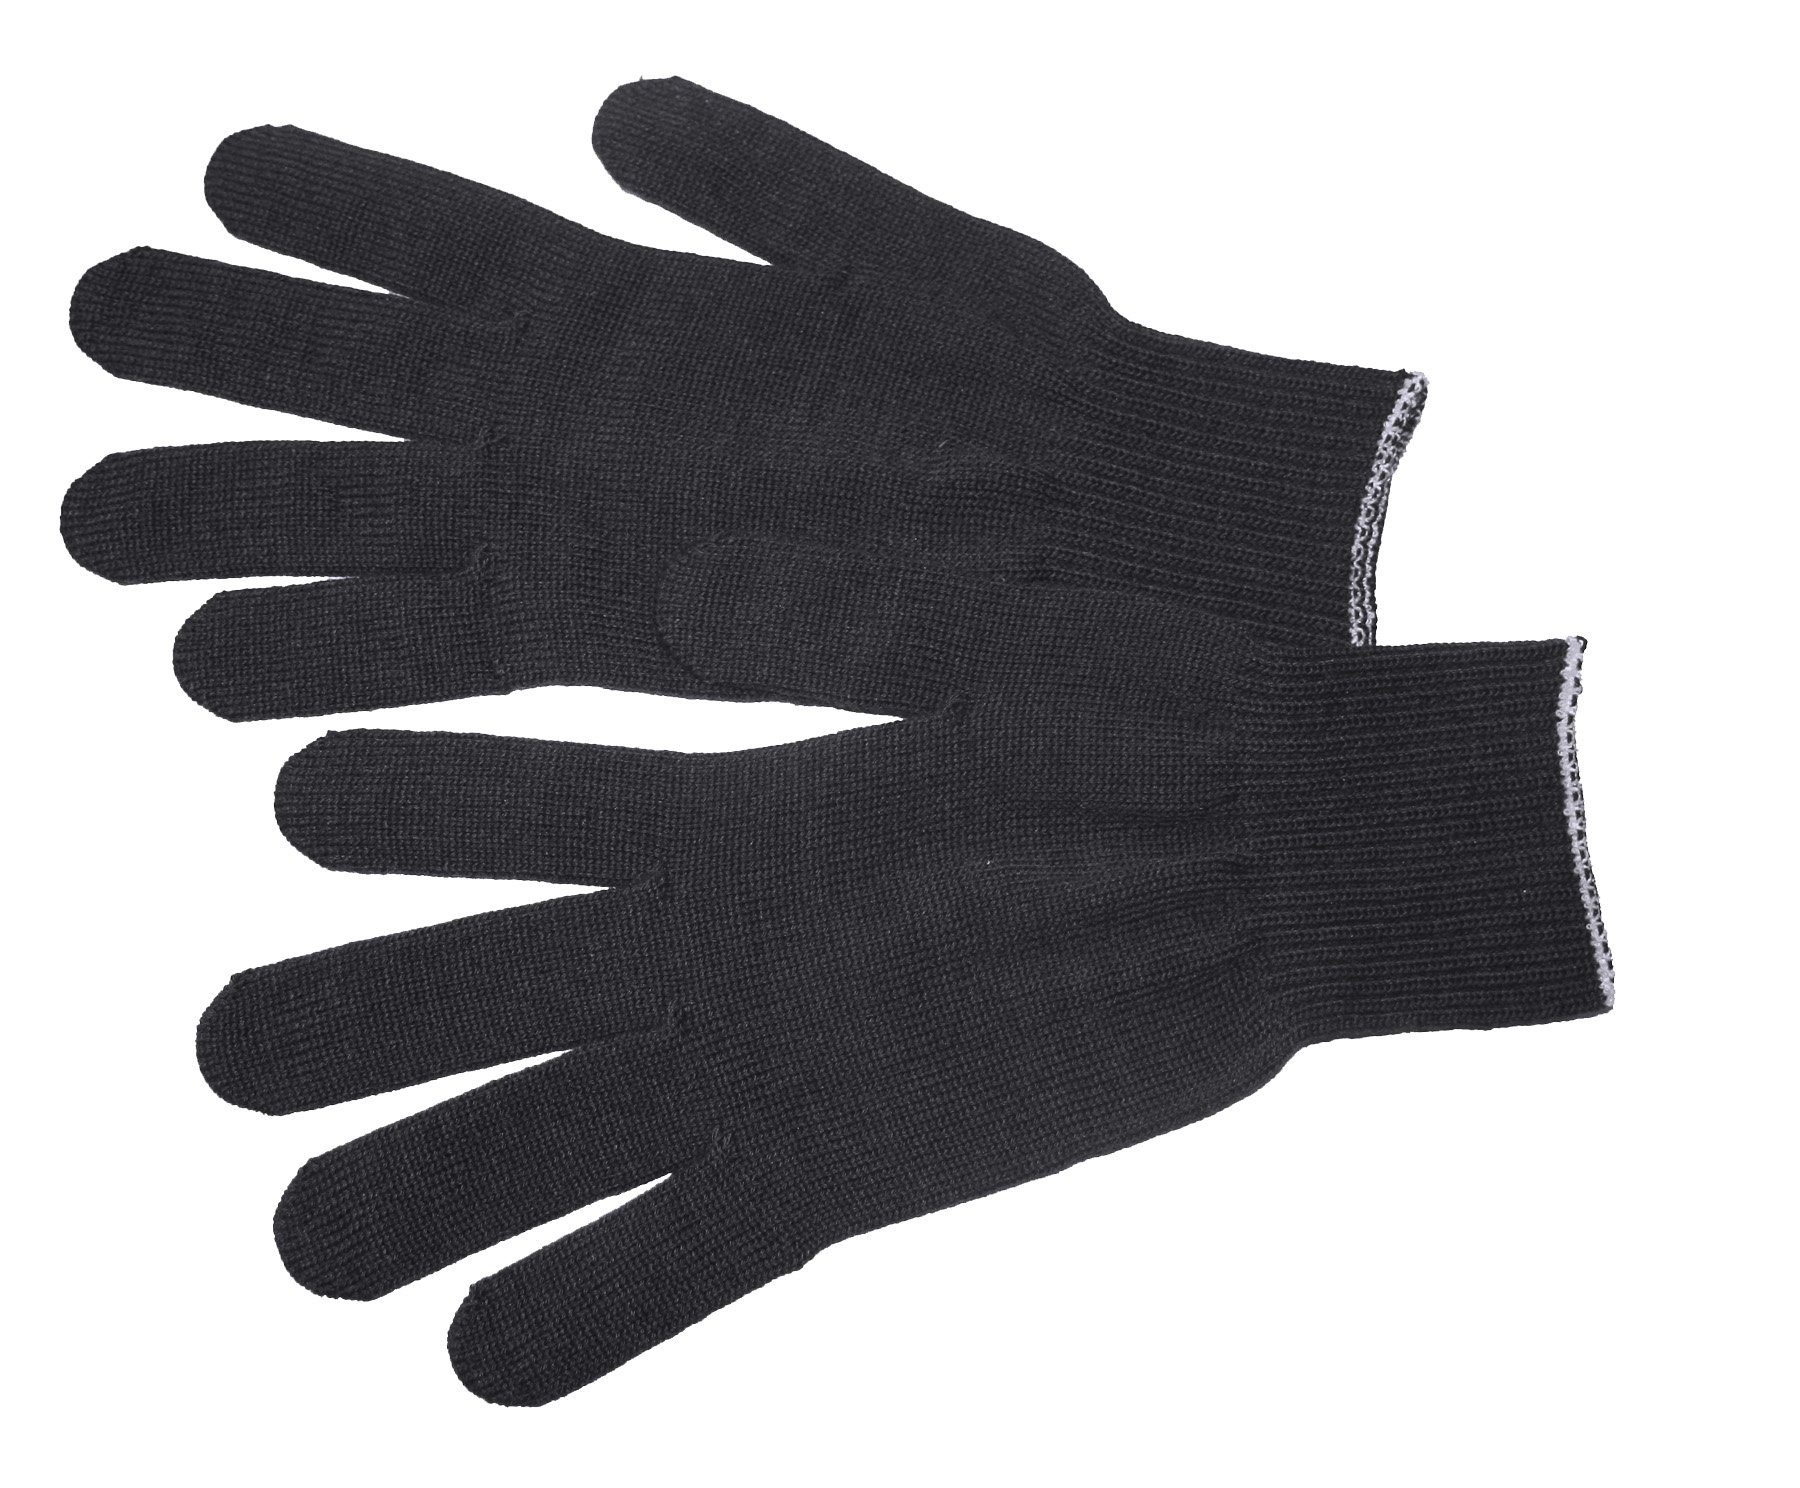 Handschuhe Thermo Kälteschutz Paar Arbeitshandschuh-Set 10 dynamic24 Strickhandschuhe